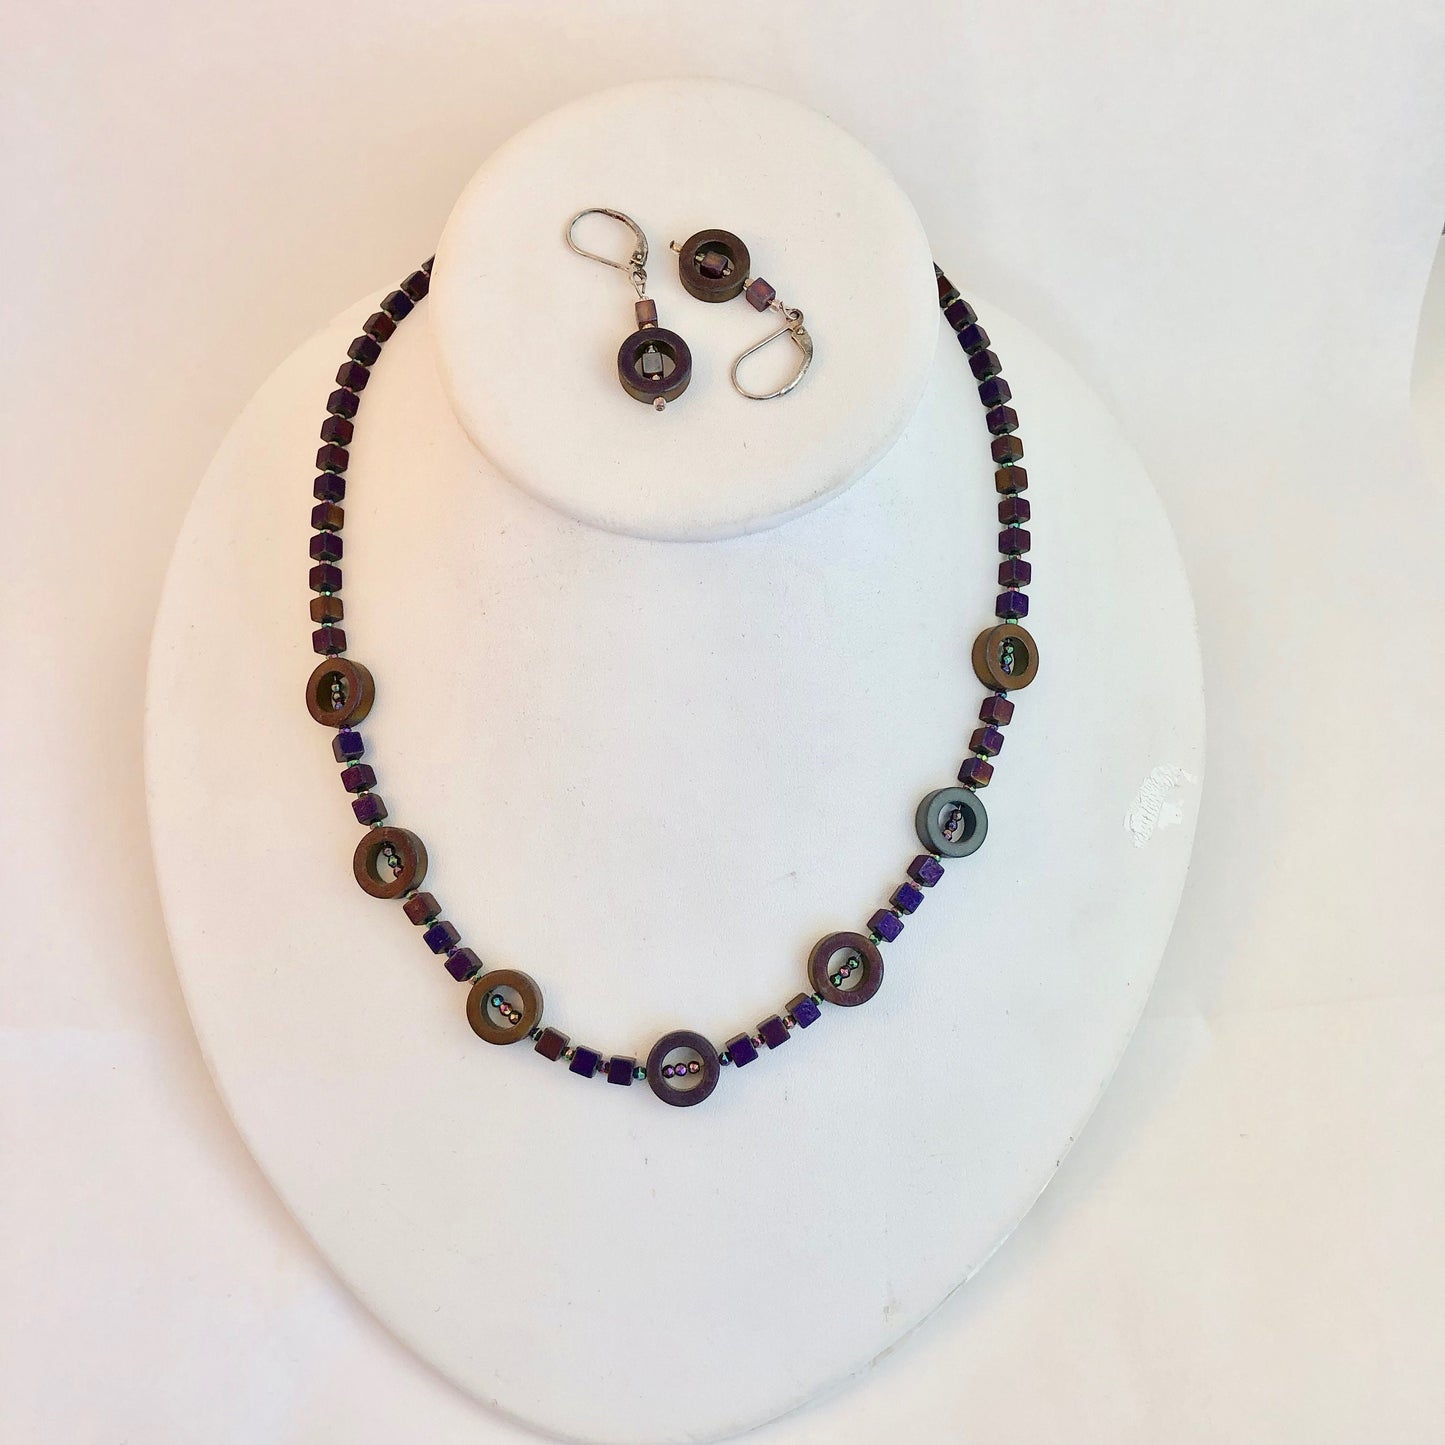 Striking and classy necklace, made of beautiful hematite stone beads. These dark purple stones, radiate with a slight aurora borealis tint.